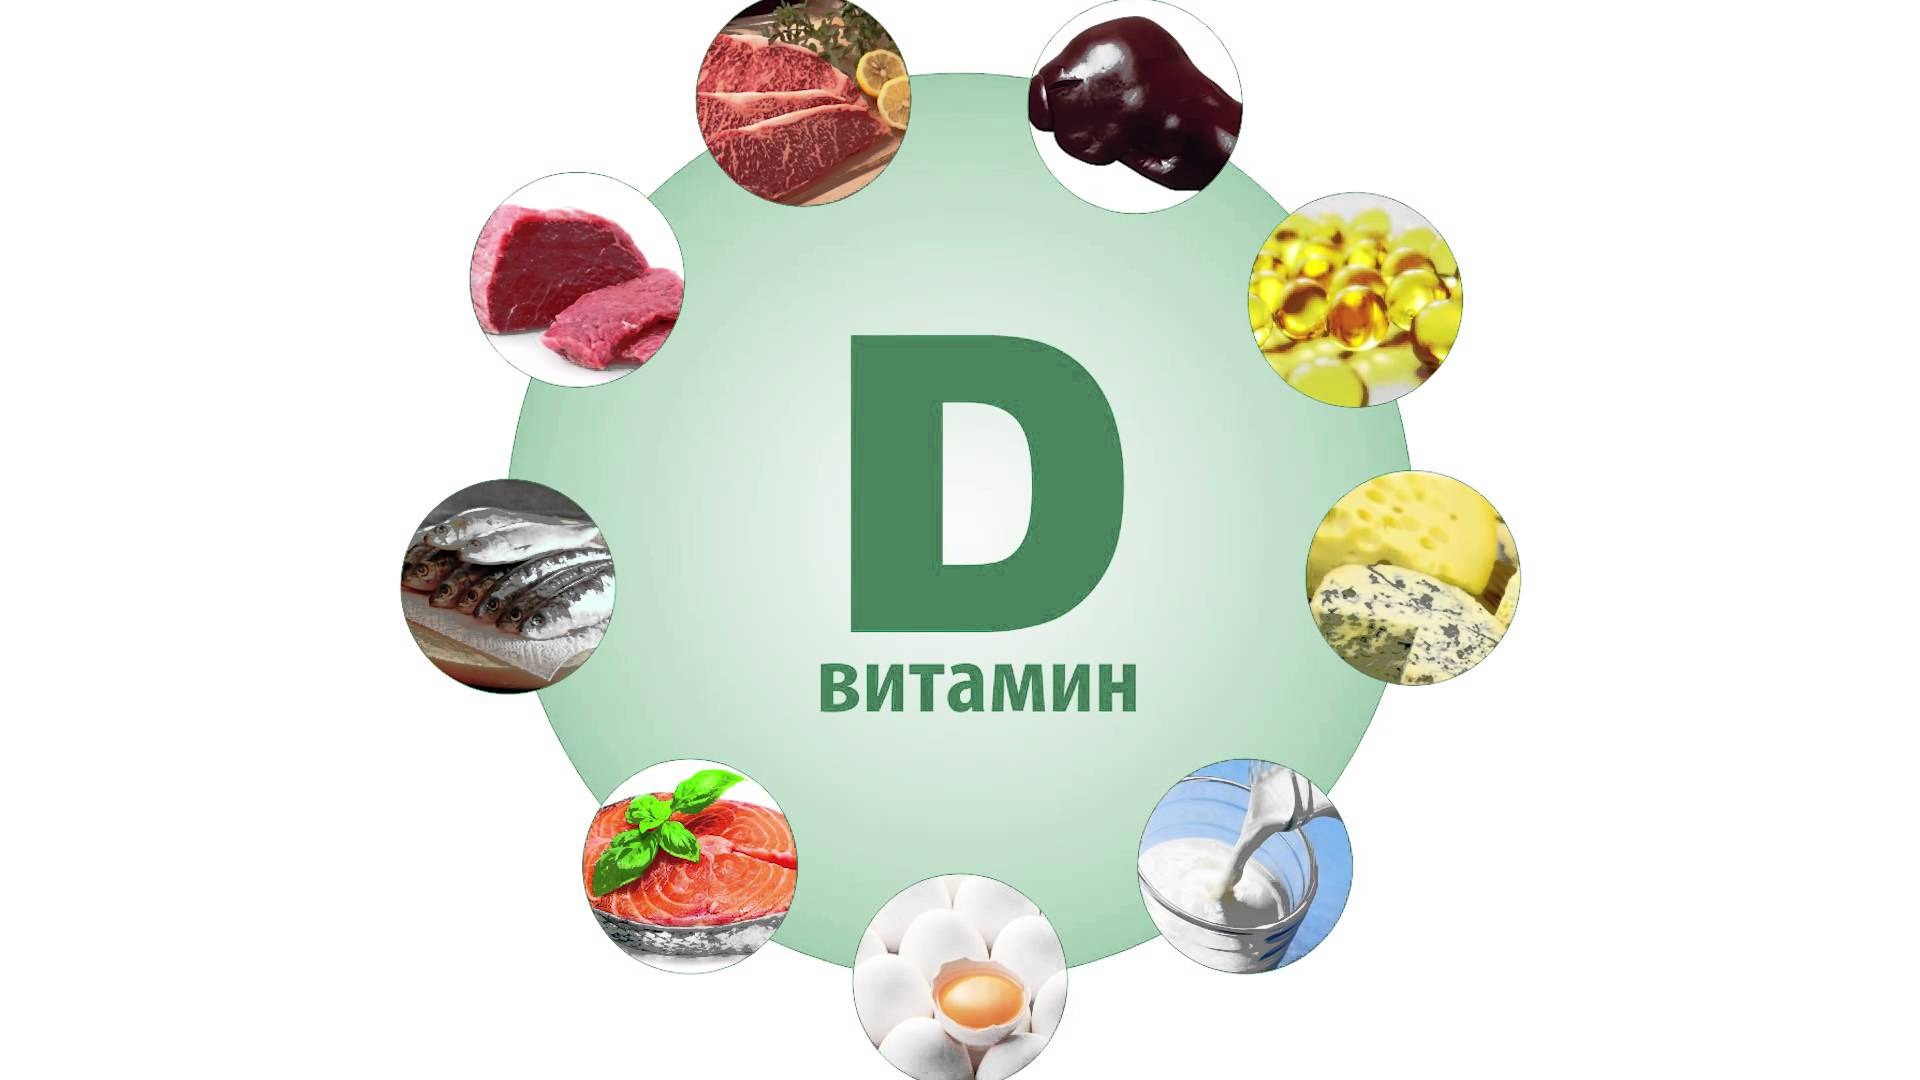 Витамин д3 это жиры. Витамин д. Витамины картинки. Витамин d картинки. Топ витаминов.